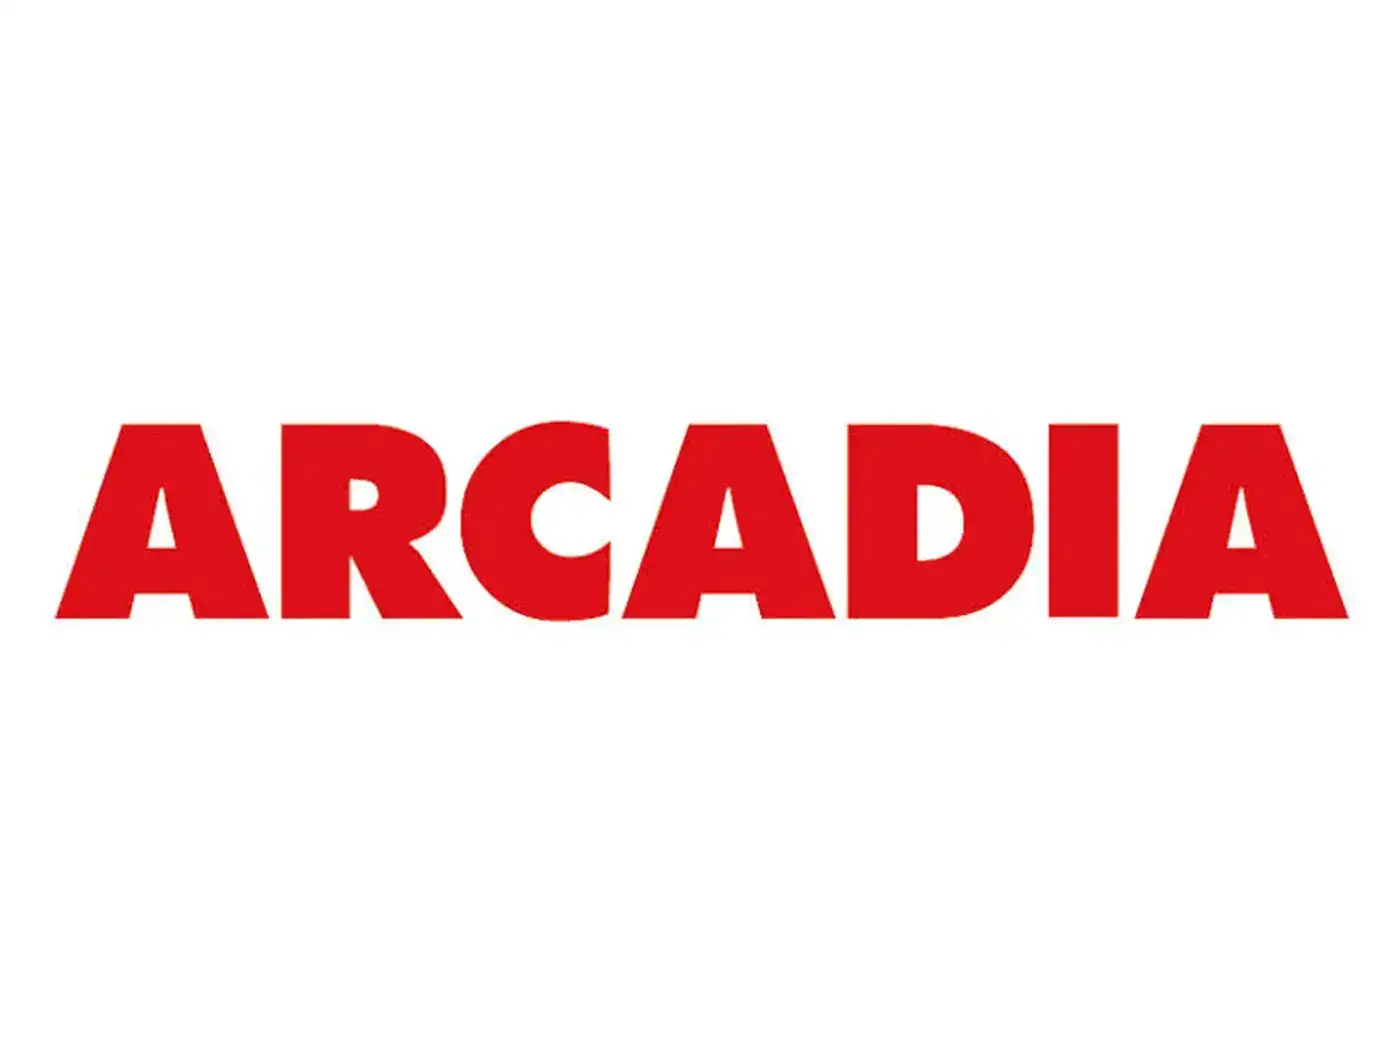 Watch Arcadia TV live streaming! Romania TV online